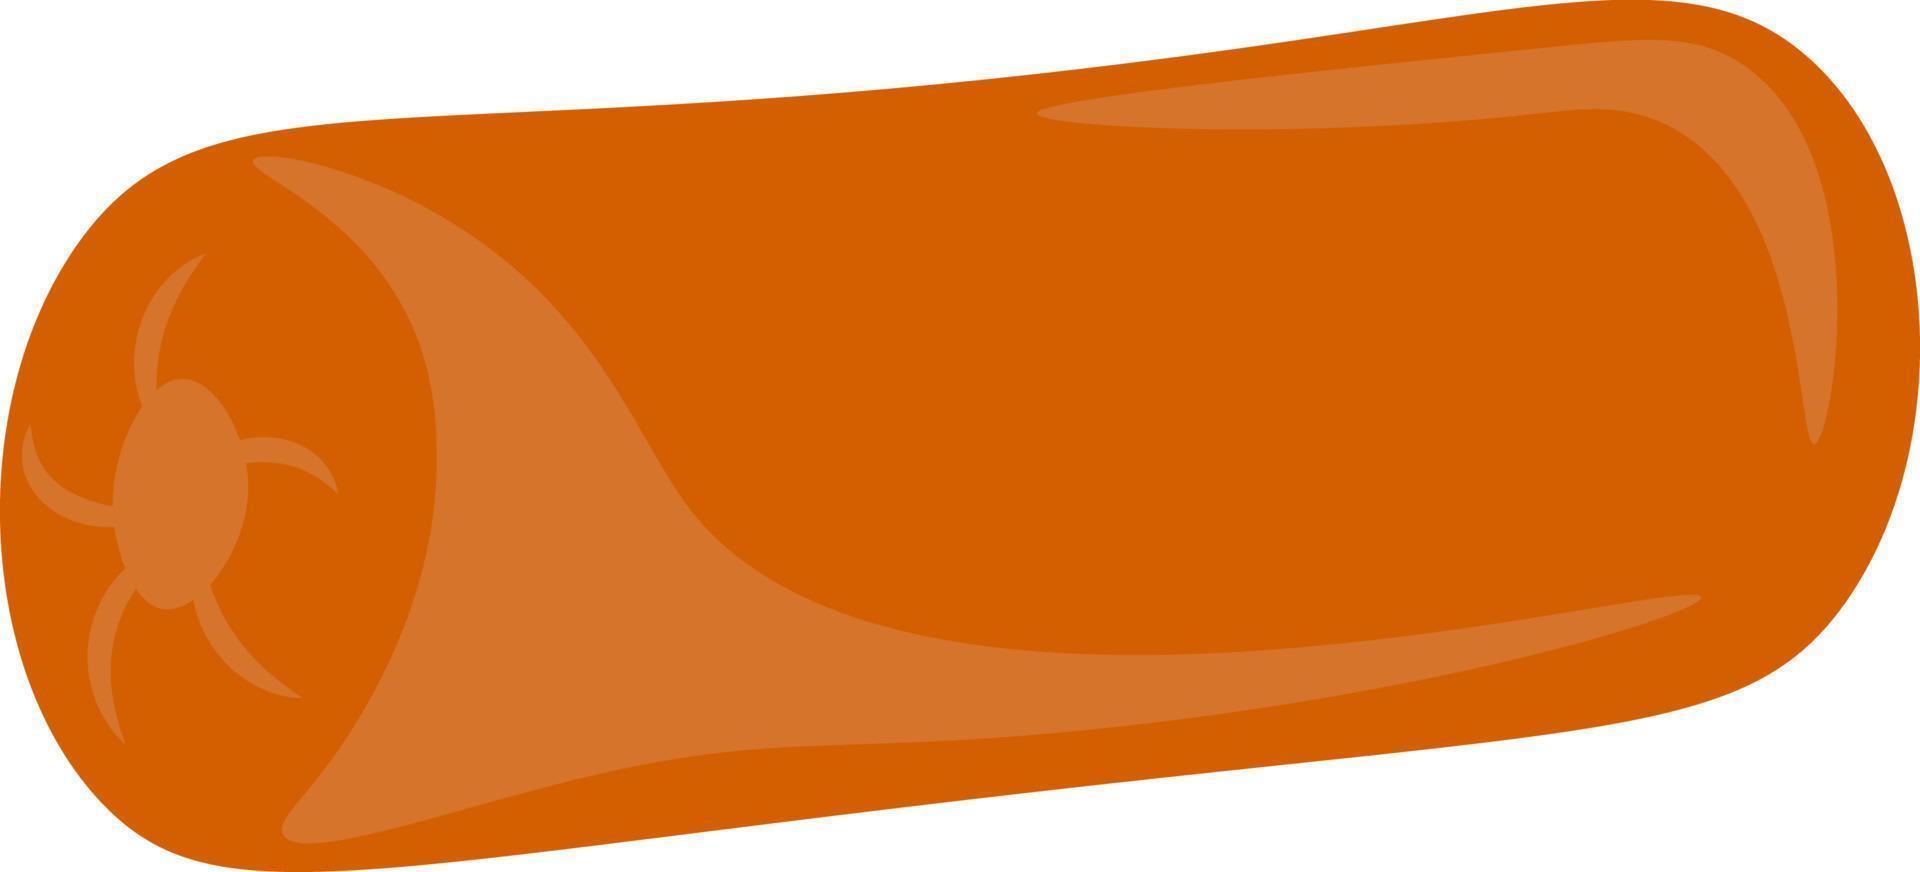 A comfortable orange pillow, vector or color illustration.